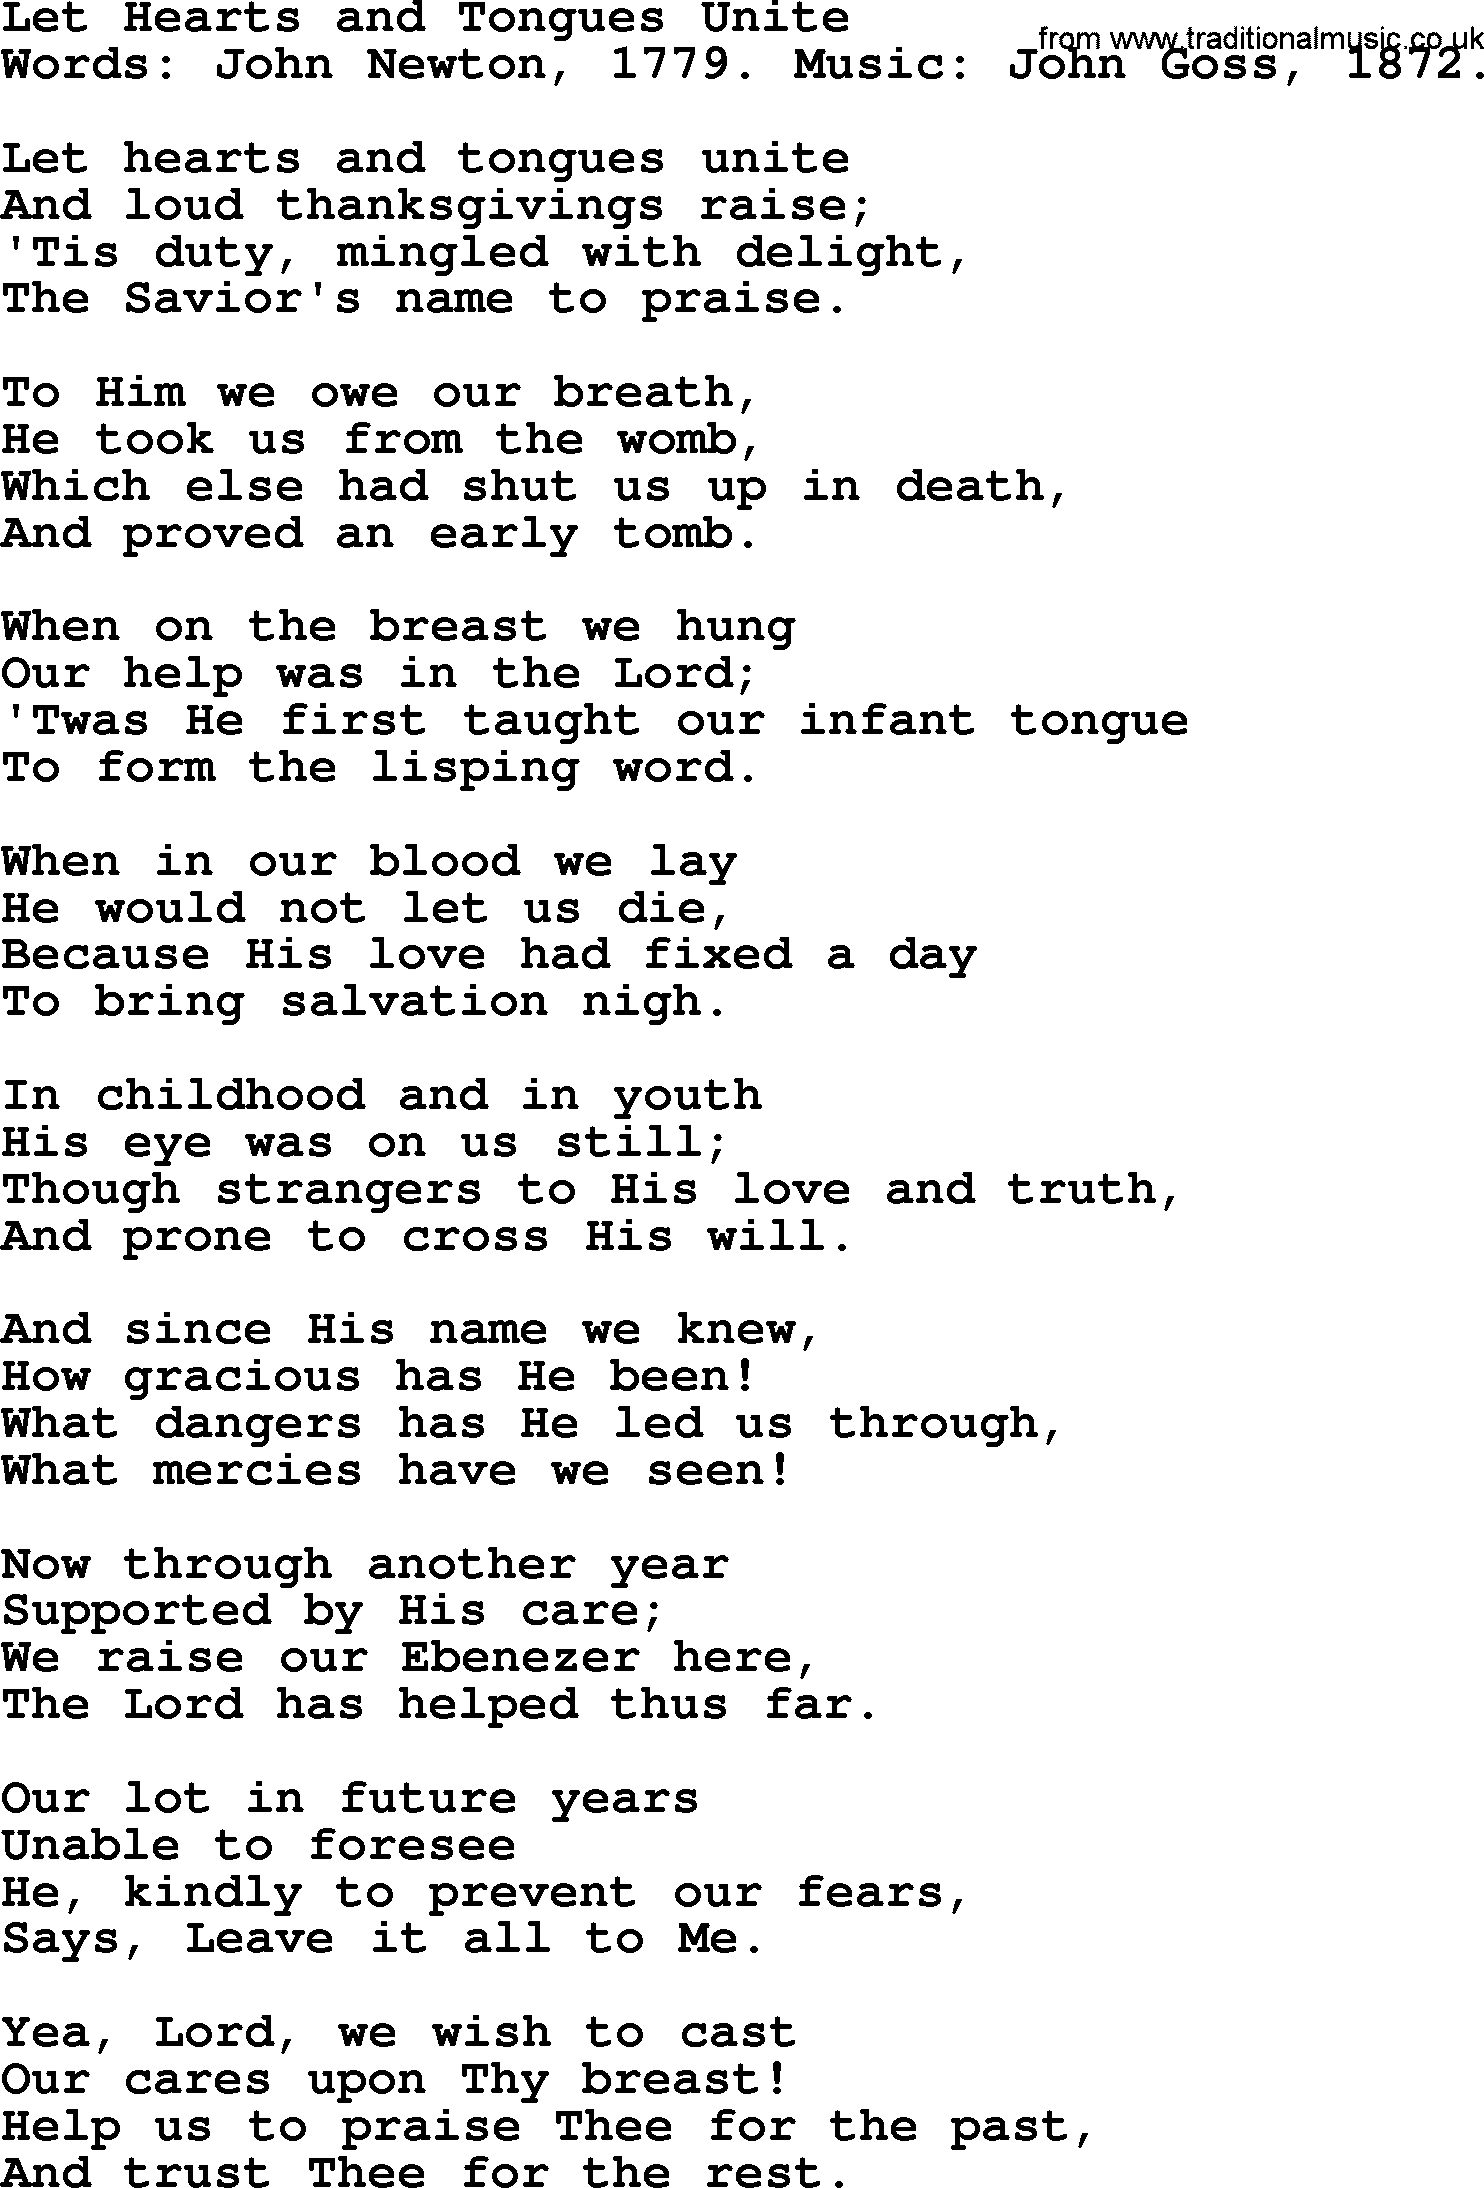 John Newton hymn: Let Hearts And Tongues Unite, lyrics